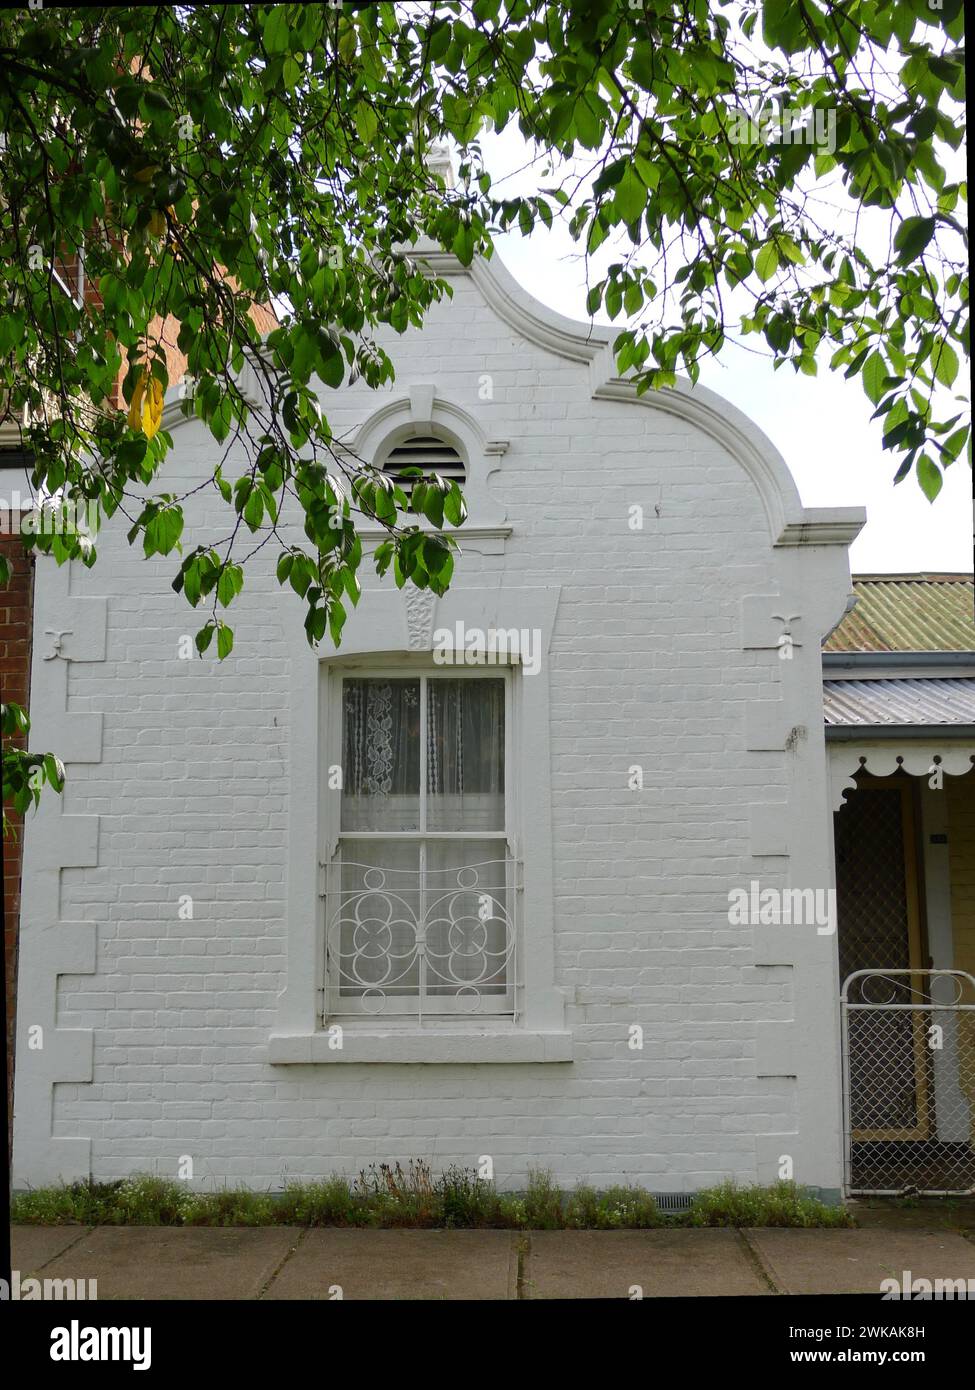 Historic white worker's terrace house with unique architectural features, Bathurst, NSW, Australia. Stock Photo